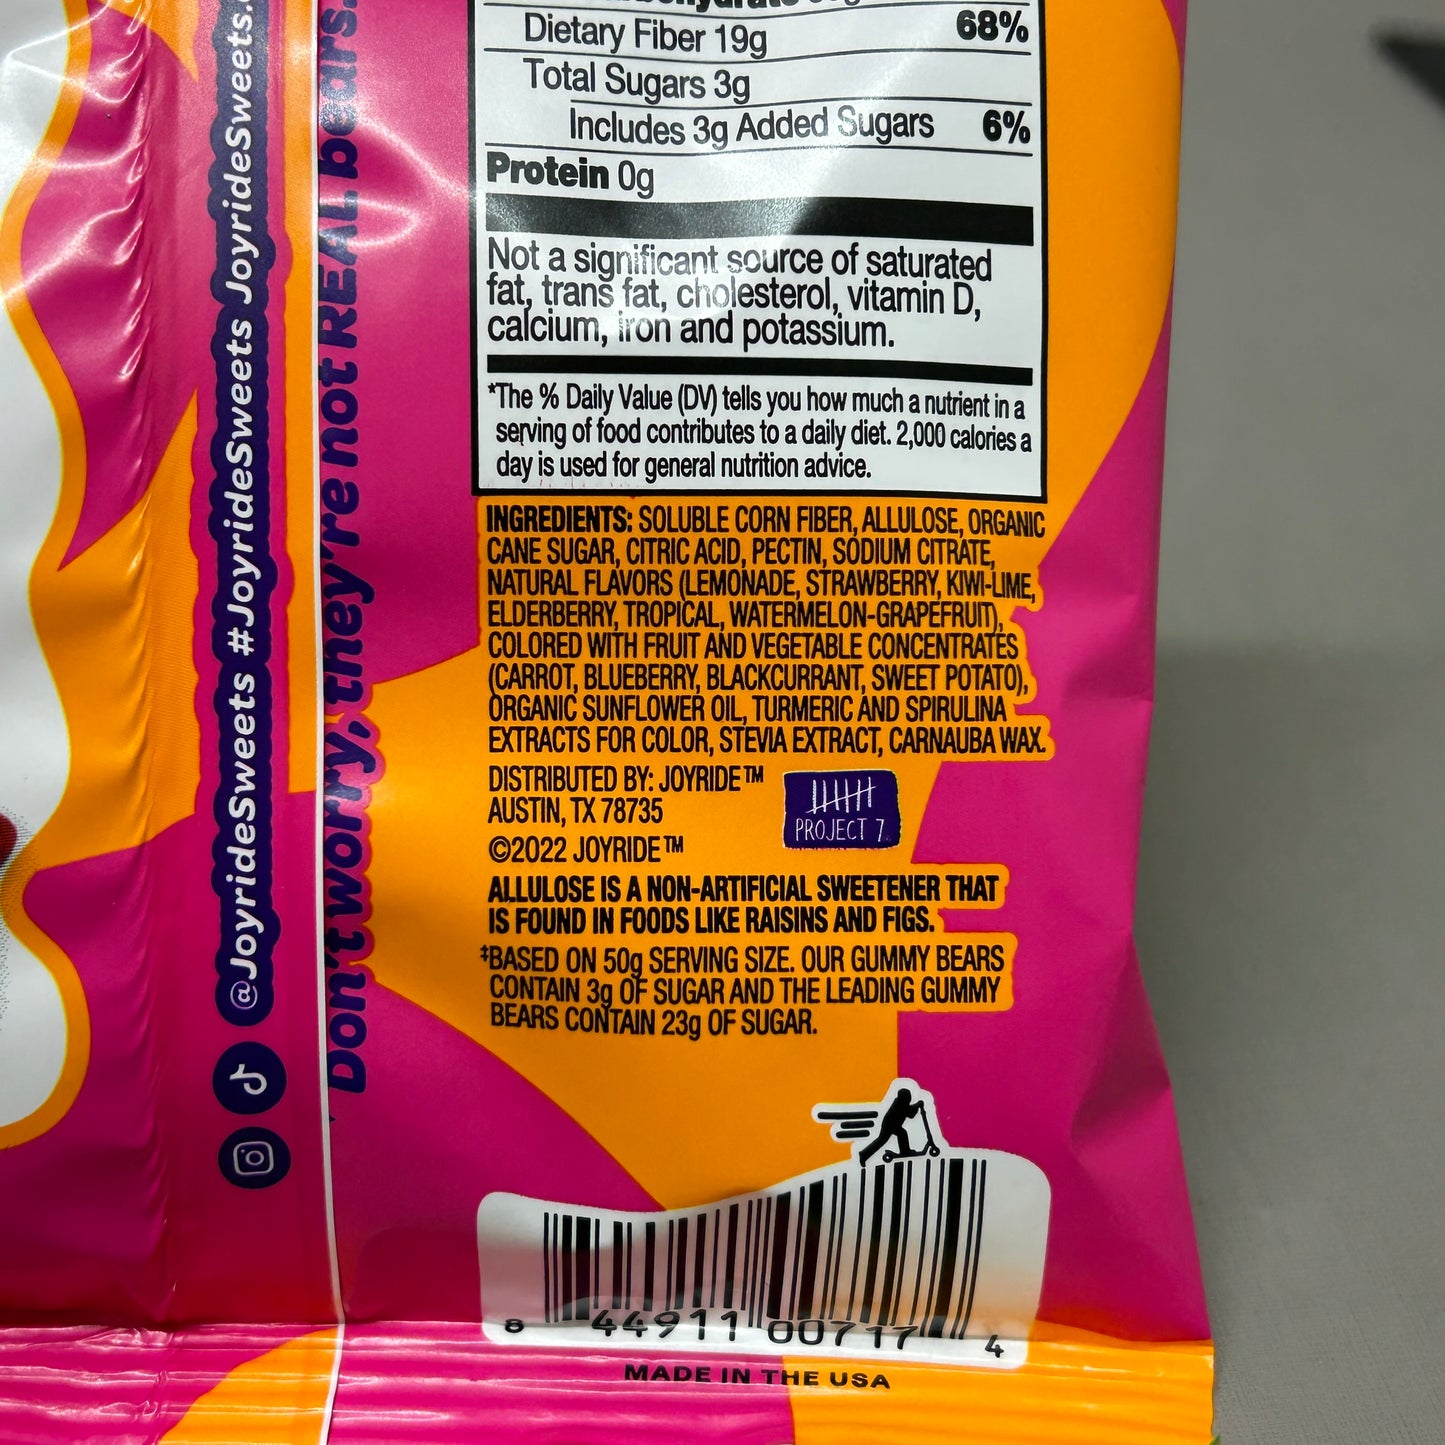 PROJECT 7 8-Pack! Joyride Fruity Gummy Bears 1 Grams of Sugar per Bag 8-1.8oz (New)